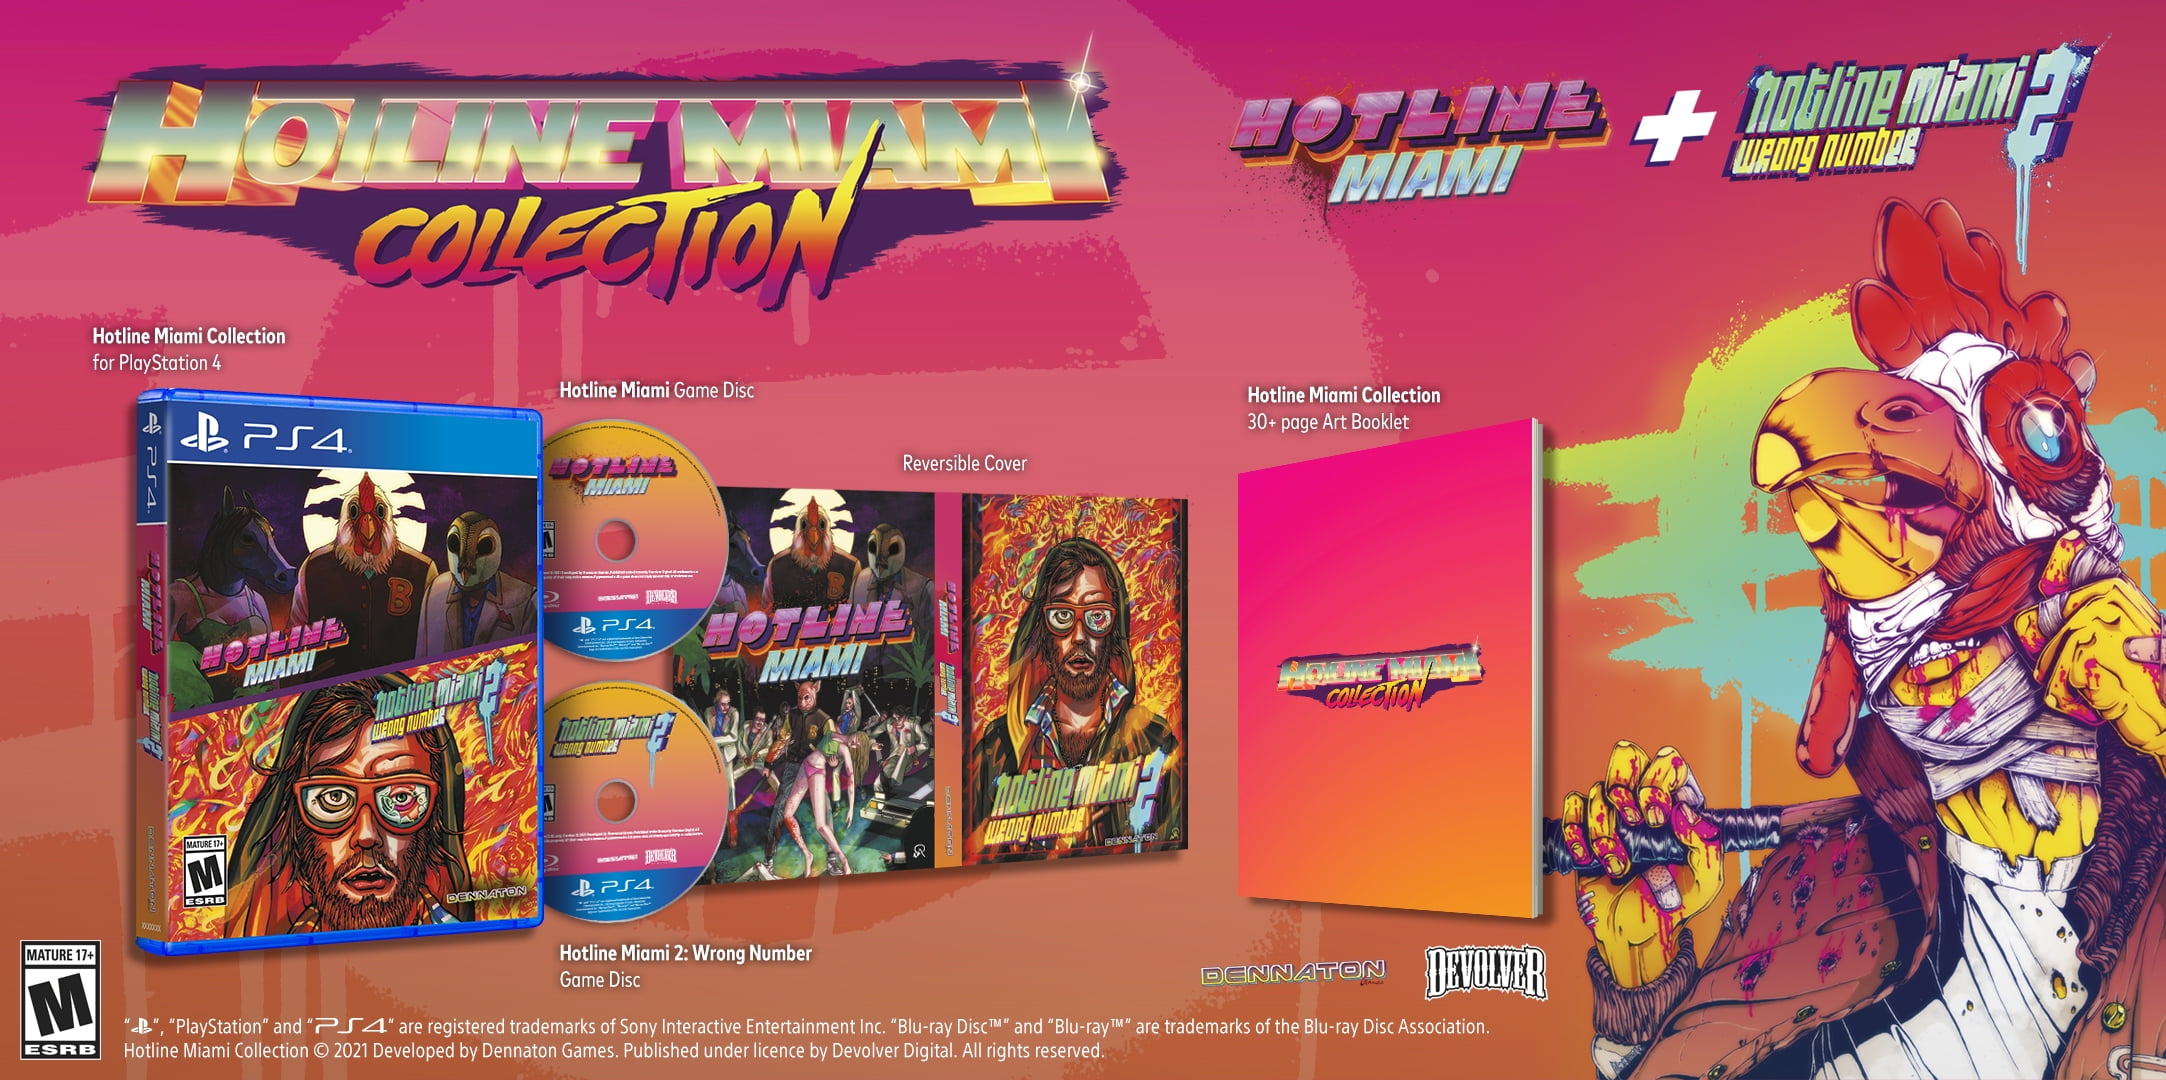 Miami collection. Хотлайн Майами пс4. Hotline Miami collection ps4 диск. Хотлайн Майами 2 на ПС 3 диск.